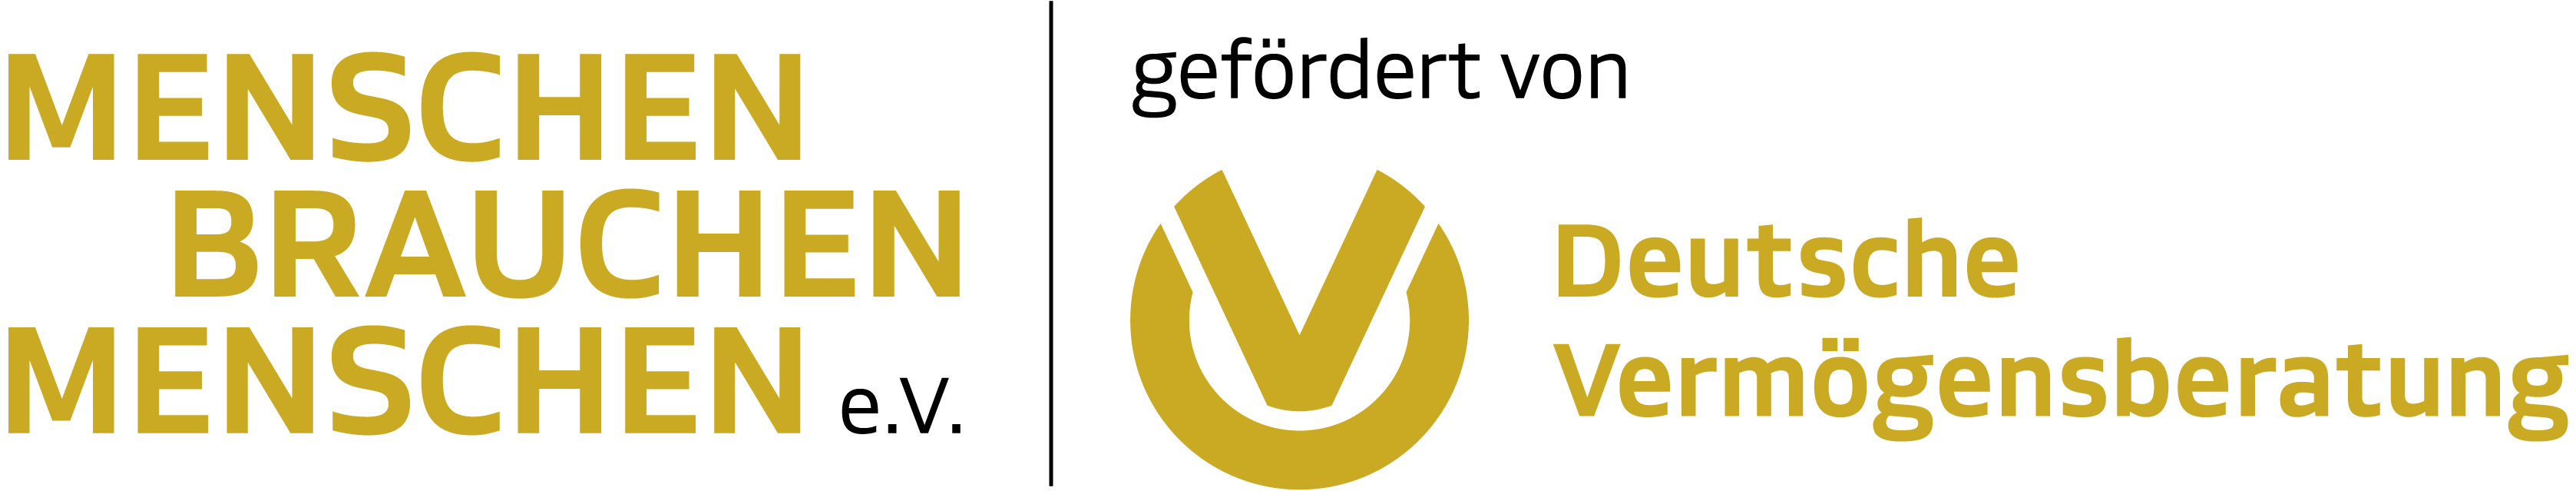 Menschen brauchen Menschen e.V. Logo